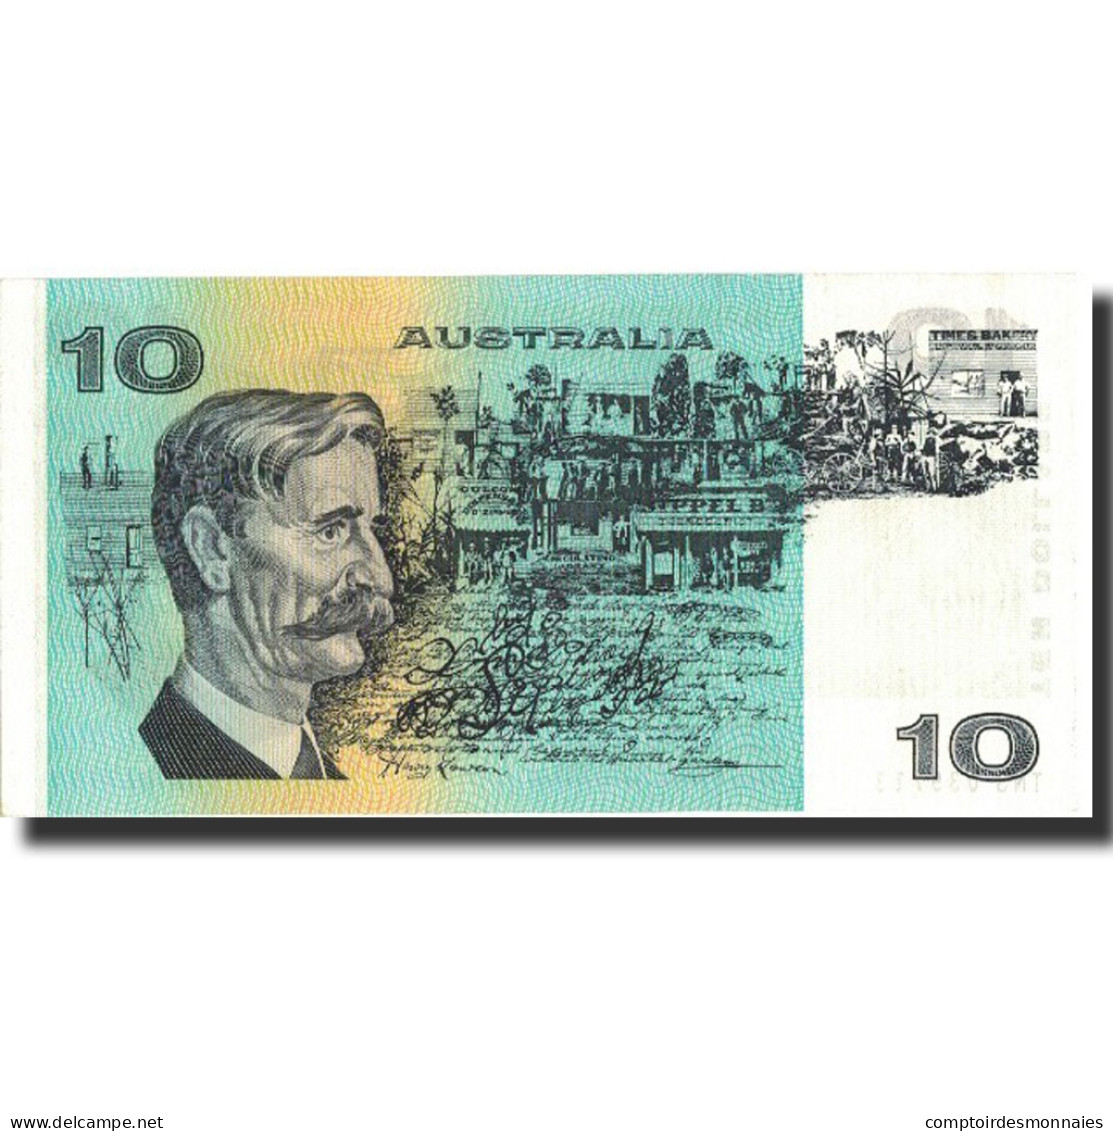 Billet, Australie, 10 Dollars, 1976, 1976, KM:45b, SPL - 1974-94 Australia Reserve Bank